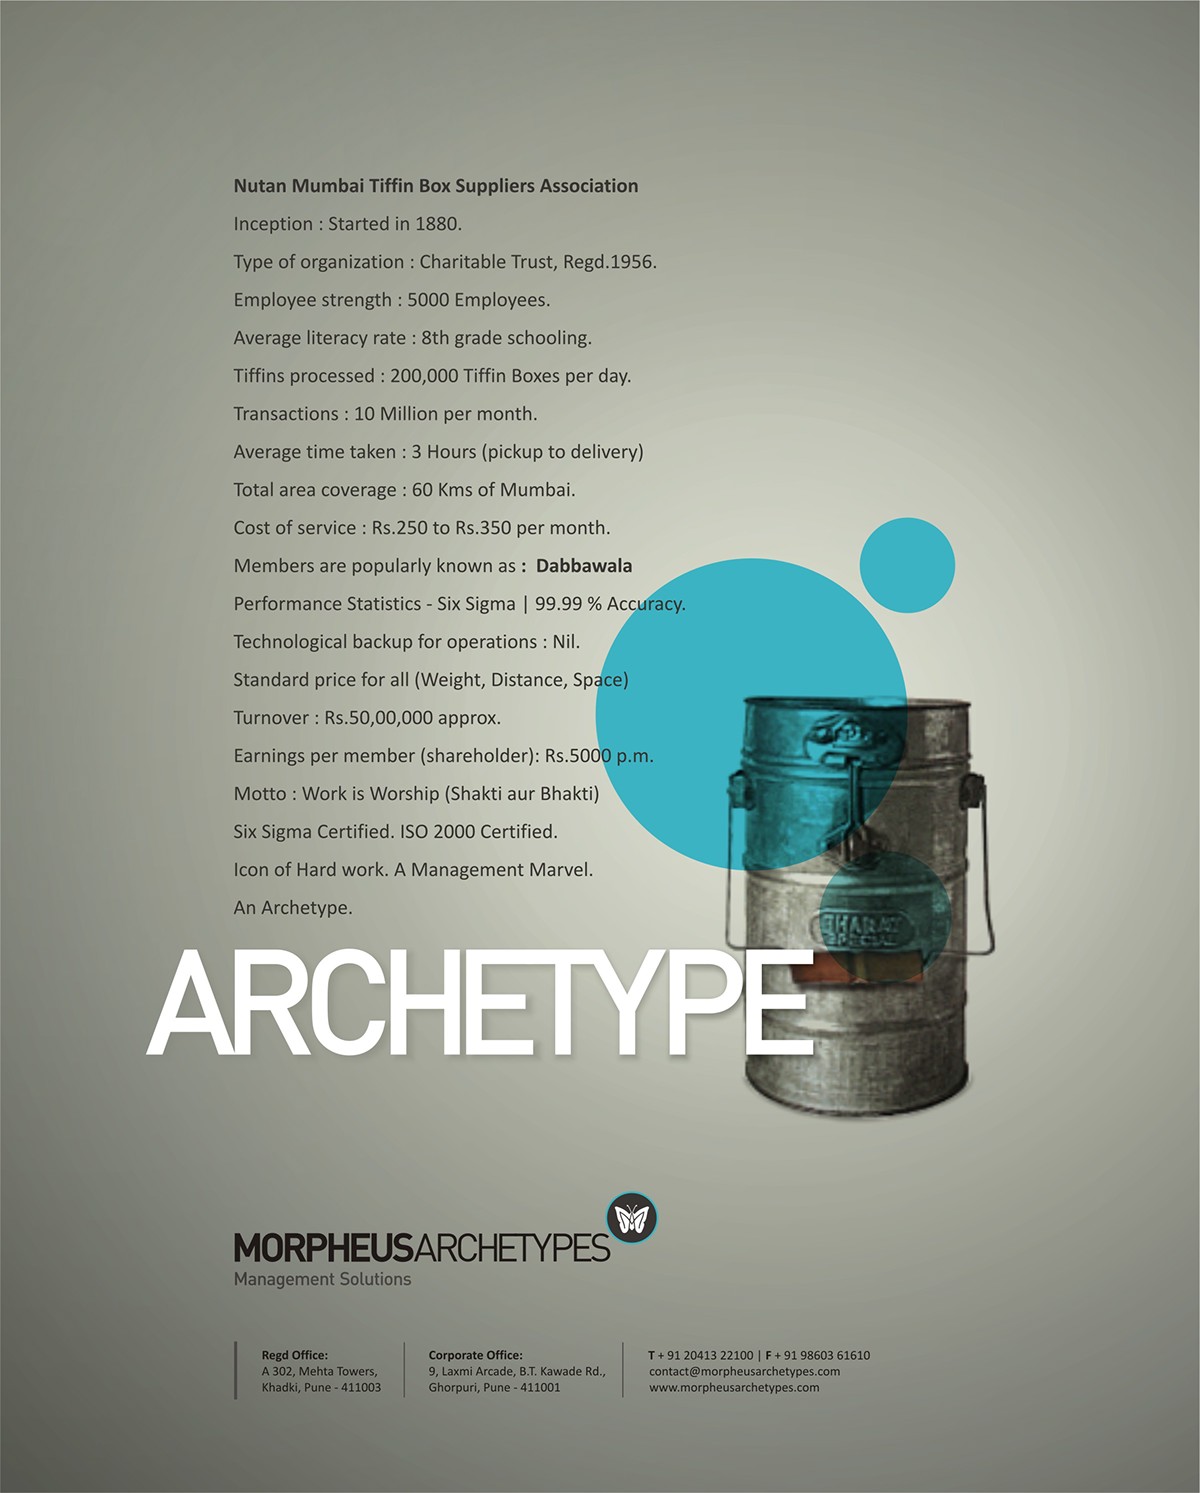 Morpheus Archetypes morpheus dreams Archetypes logo identity black & white Management Soutions